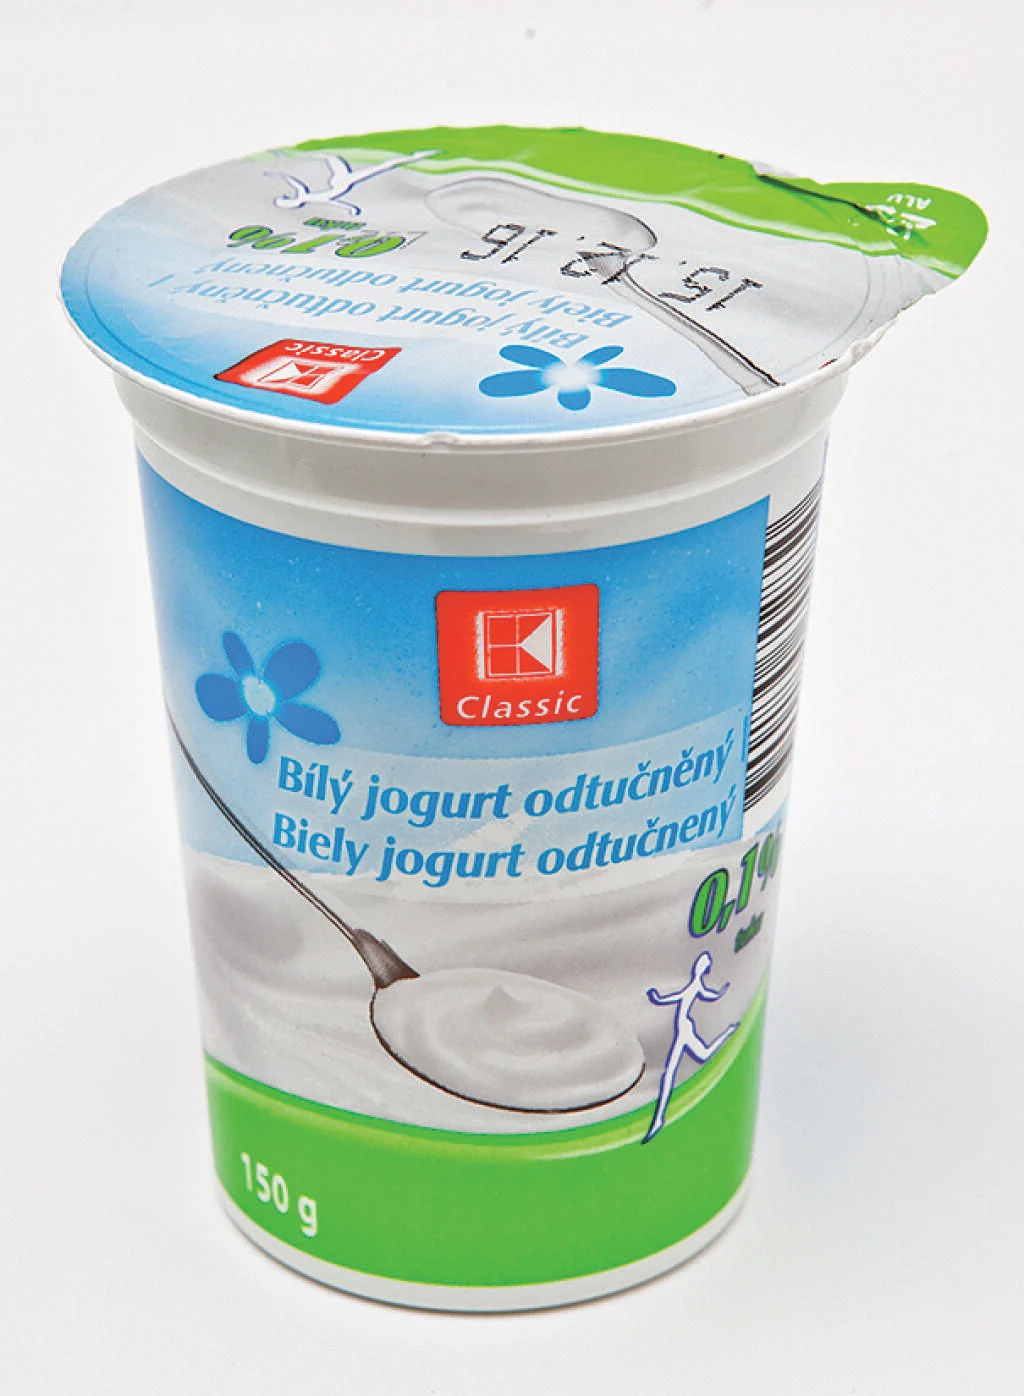 K-classic biely jogurt light - 0,1% tuku - 150 gramov